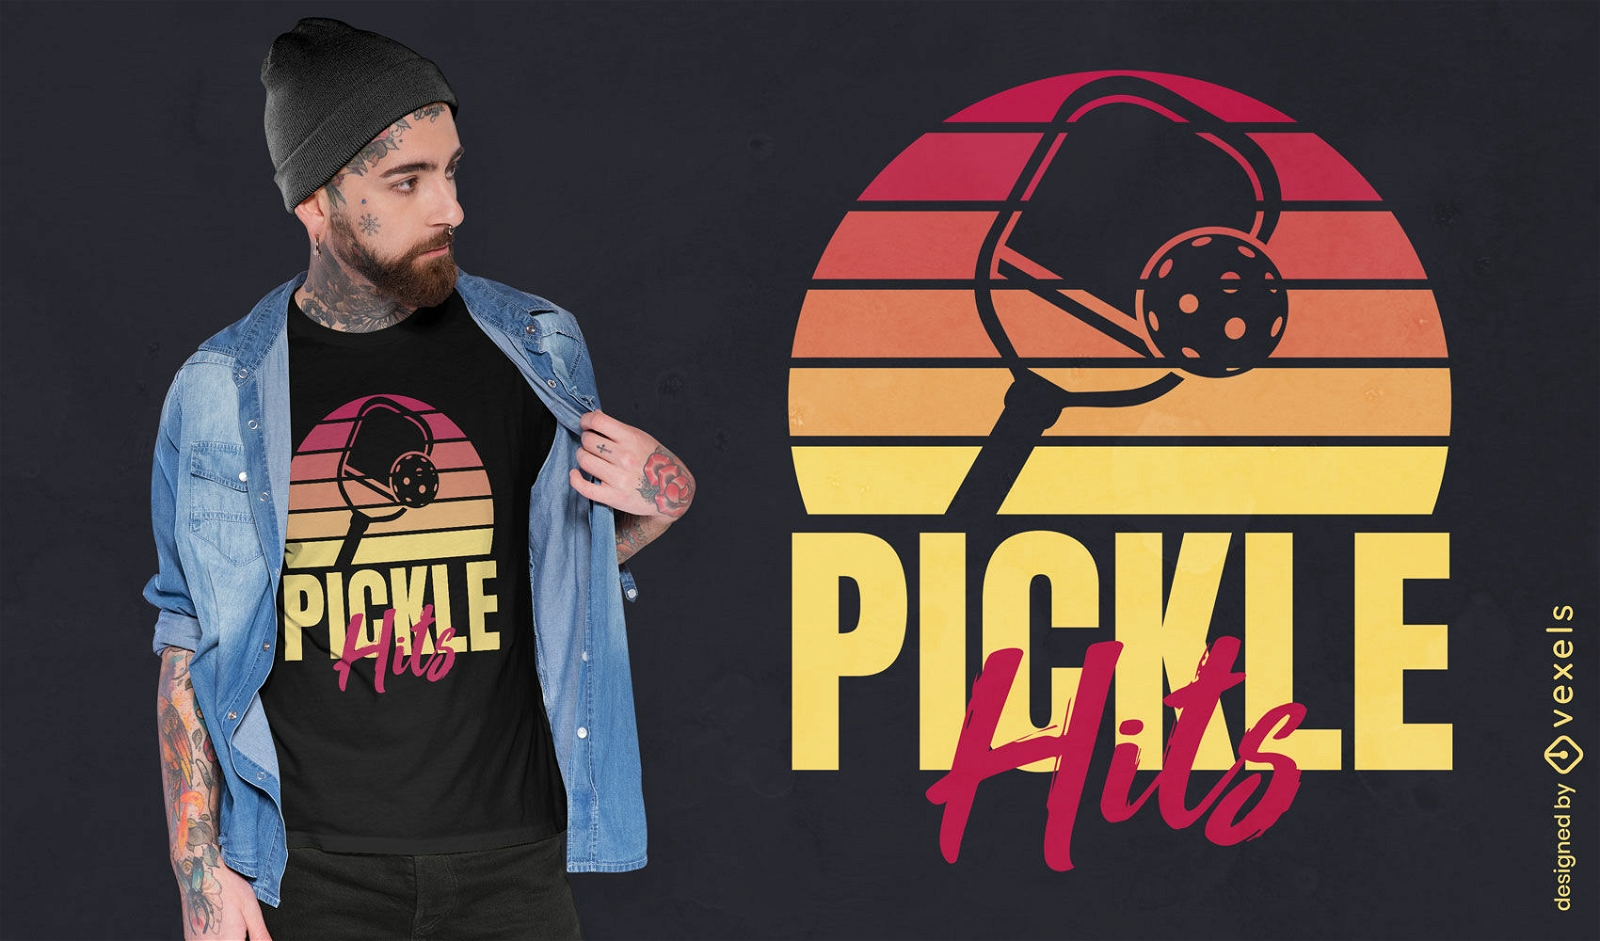 Pickle atinge o design de camisetas